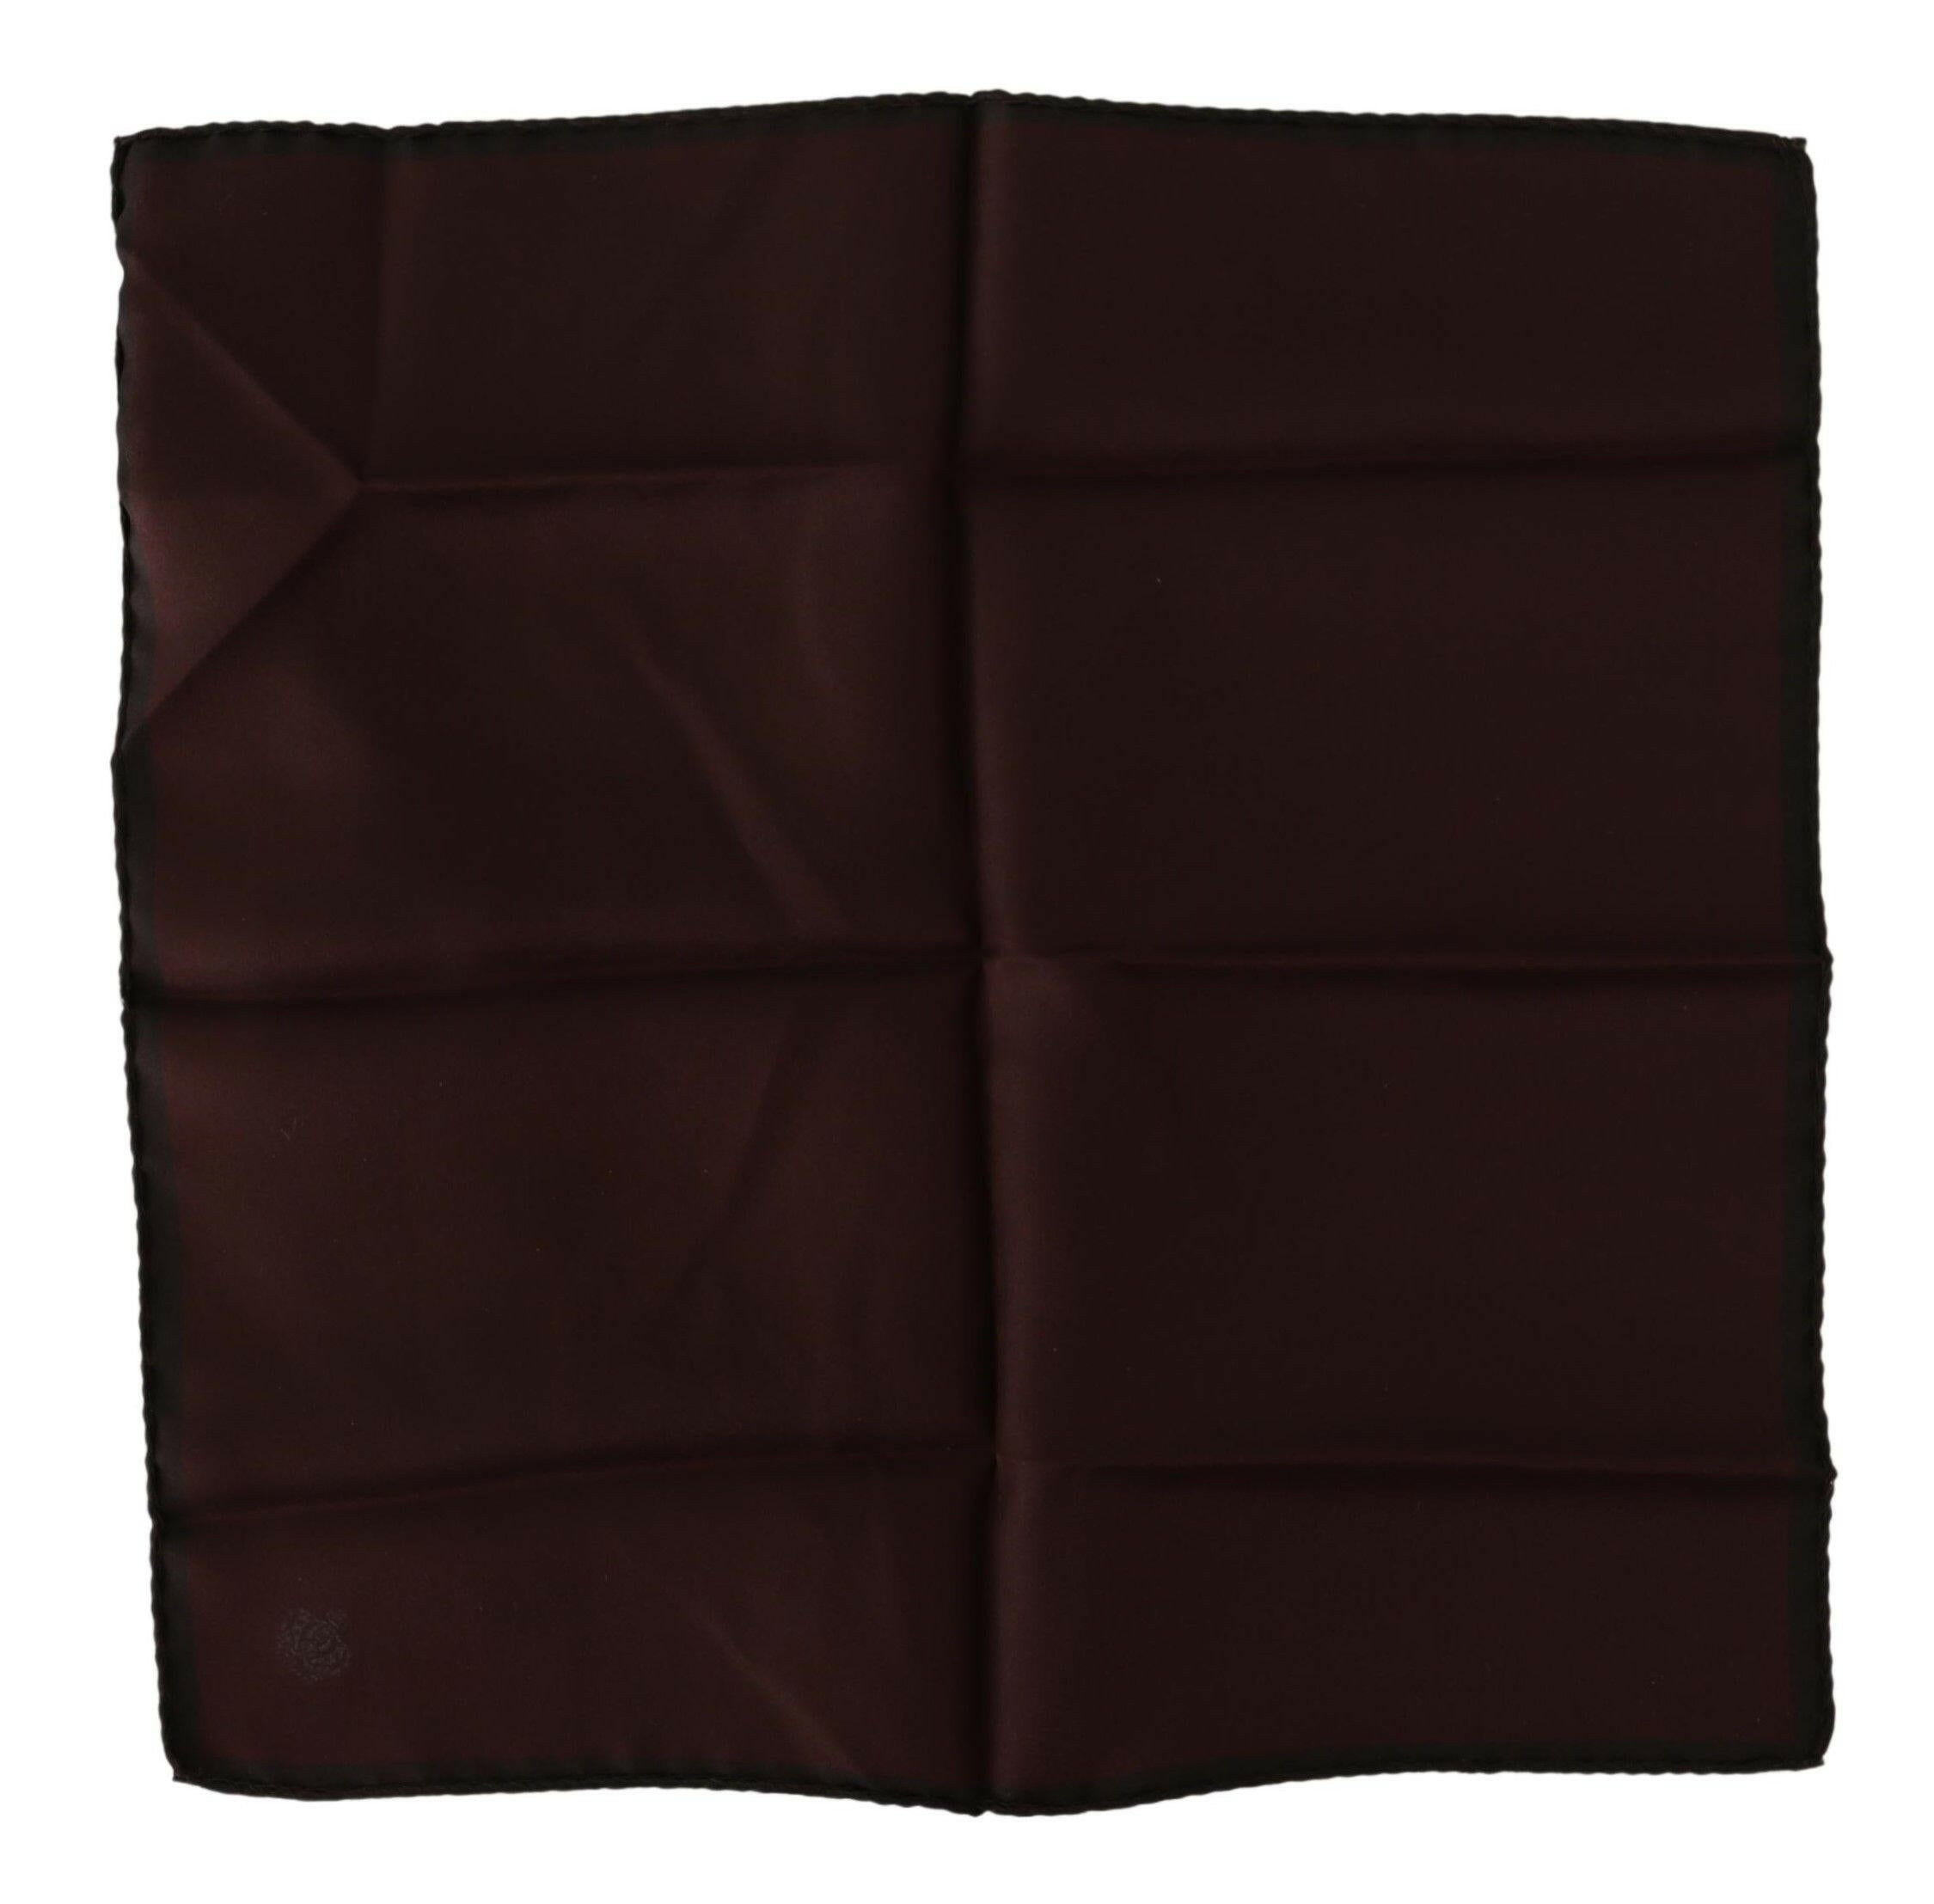 Dolce & Gabbana Maroon Square Handkerchief 100% Silk Scarf - GENUINE AUTHENTIC BRAND LLC  